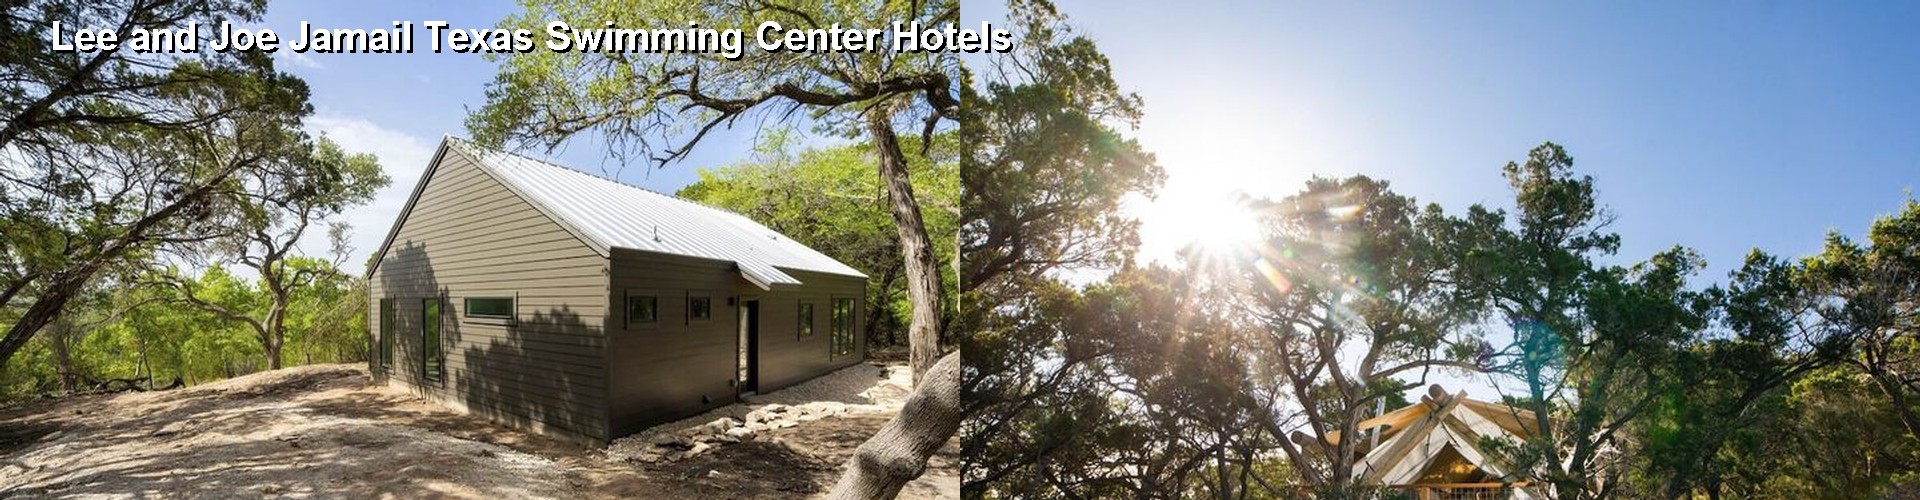 4 Best Hotels near Lee and Joe Jamail Texas Swimming Center